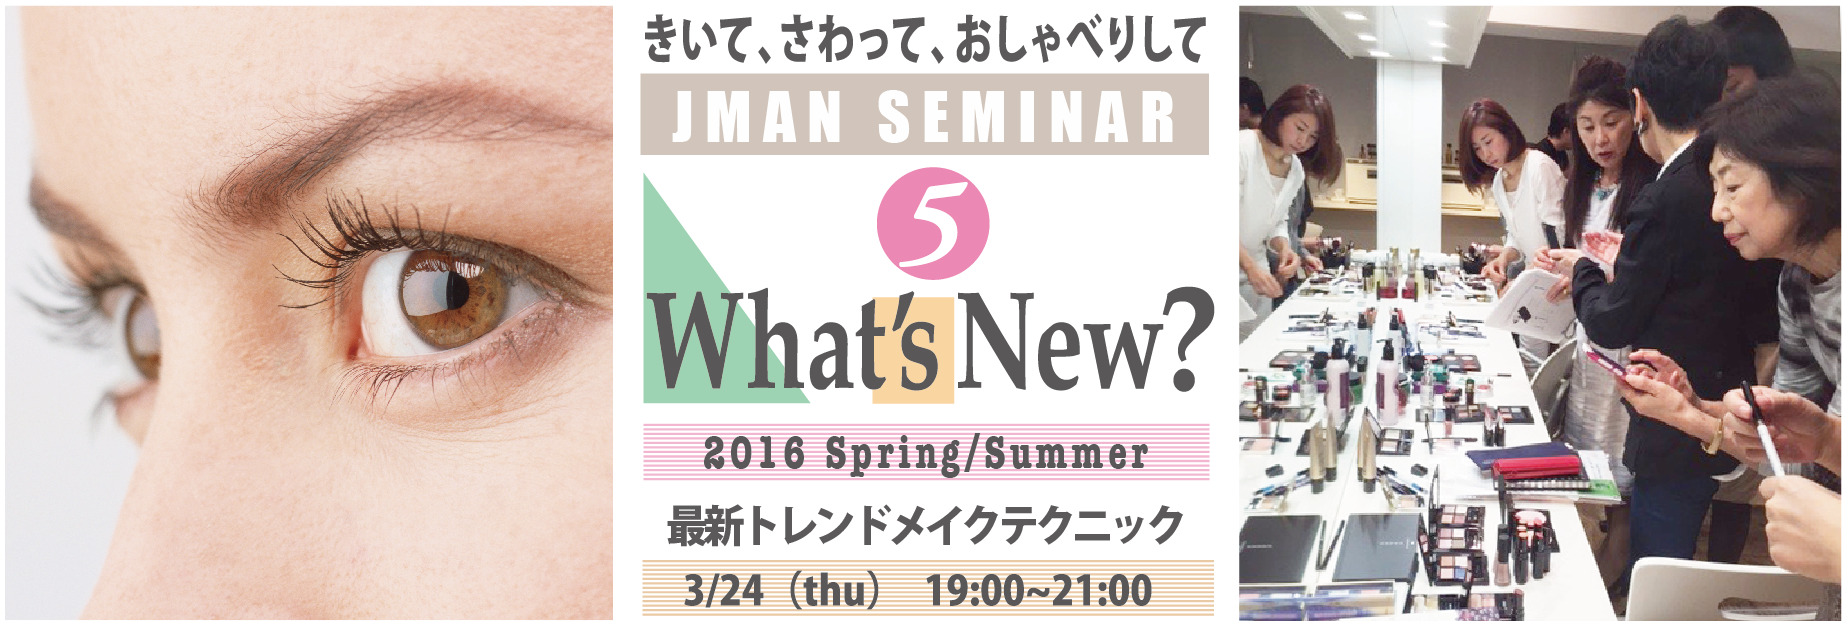 JMAN講座 “What's New?” vol.5 参加受付中です。